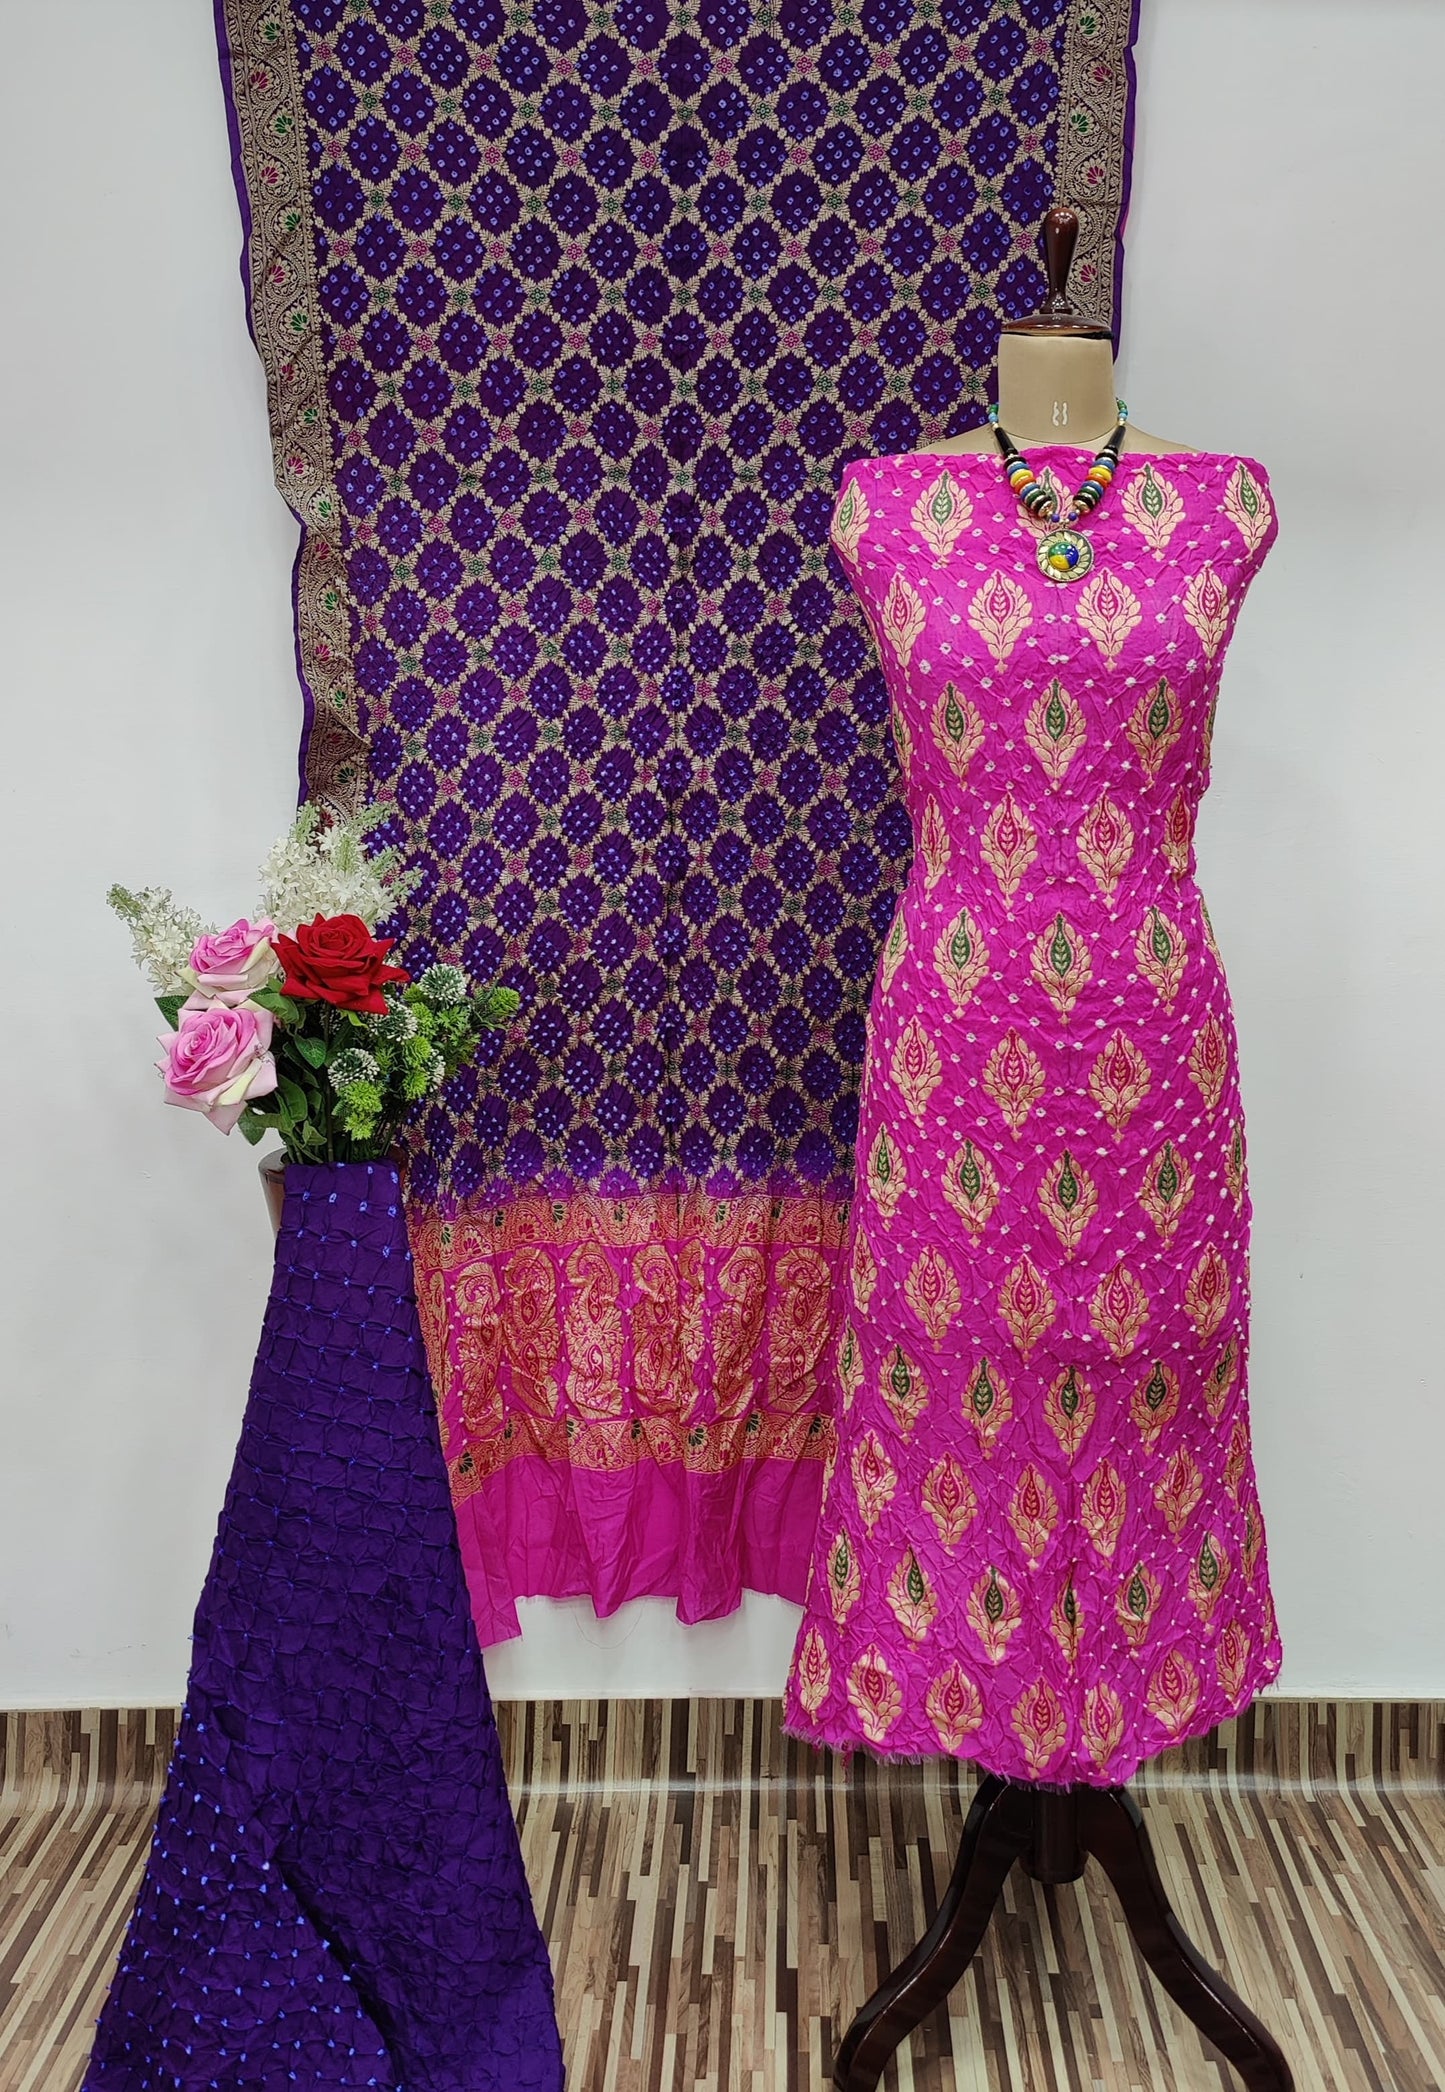 Dhupiyan Silk Authentic Hande made Jamanagar kasab work Bandhani dress material - Premium  from Ethenika.com  - Just INR 4990! Shop now at Ethenika.com 